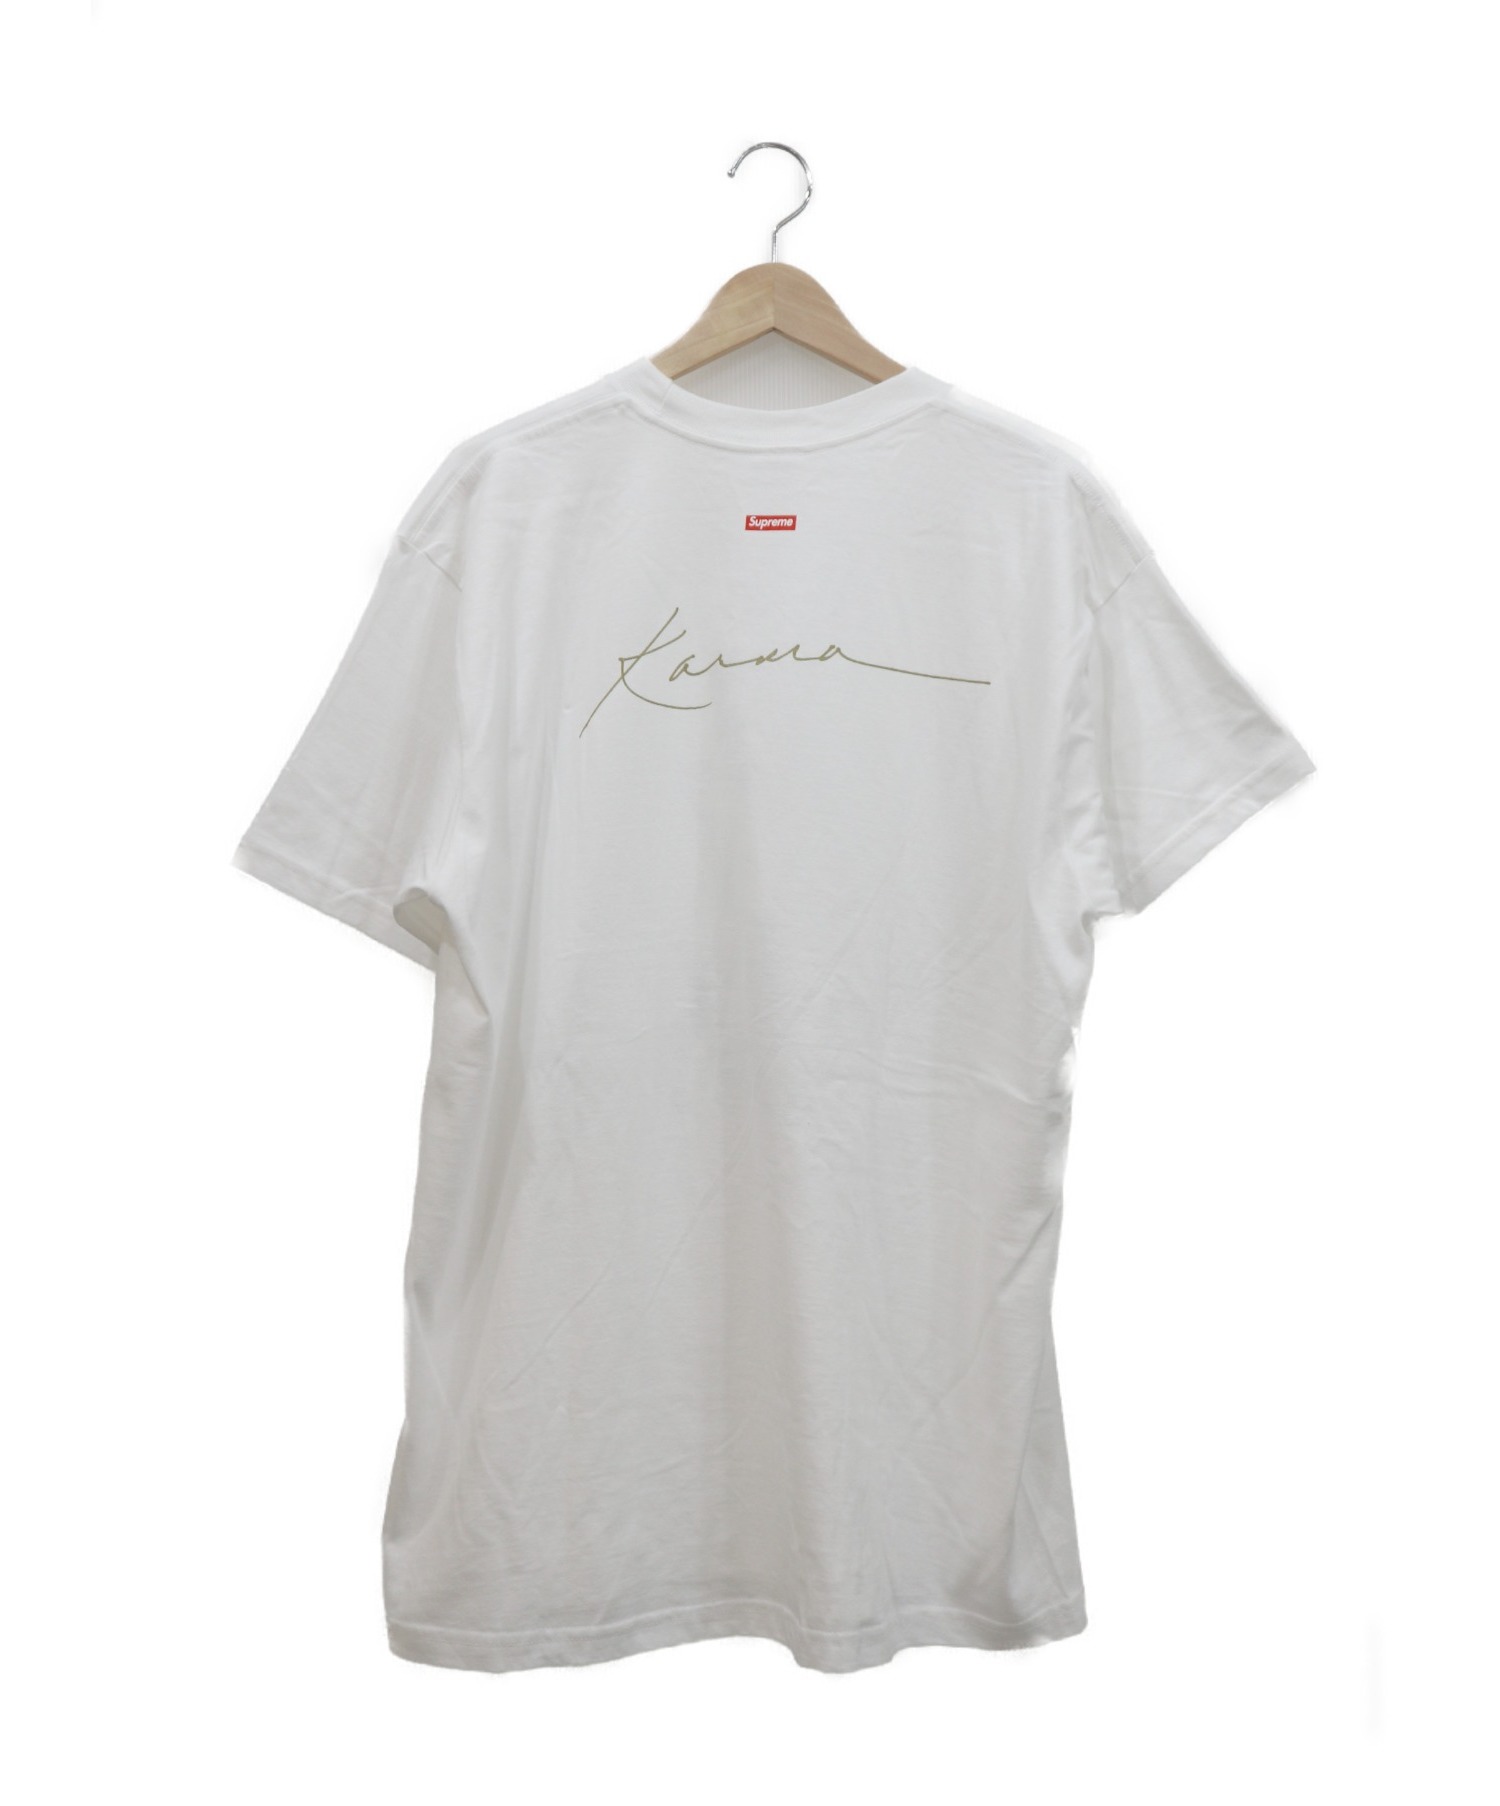 Supreme (シュプリーム) プリントTシャツ ホワイト×ベージュ サイズ:L 20AW WEEK1 PHAROAH SANDERS TEE  人気アイテム